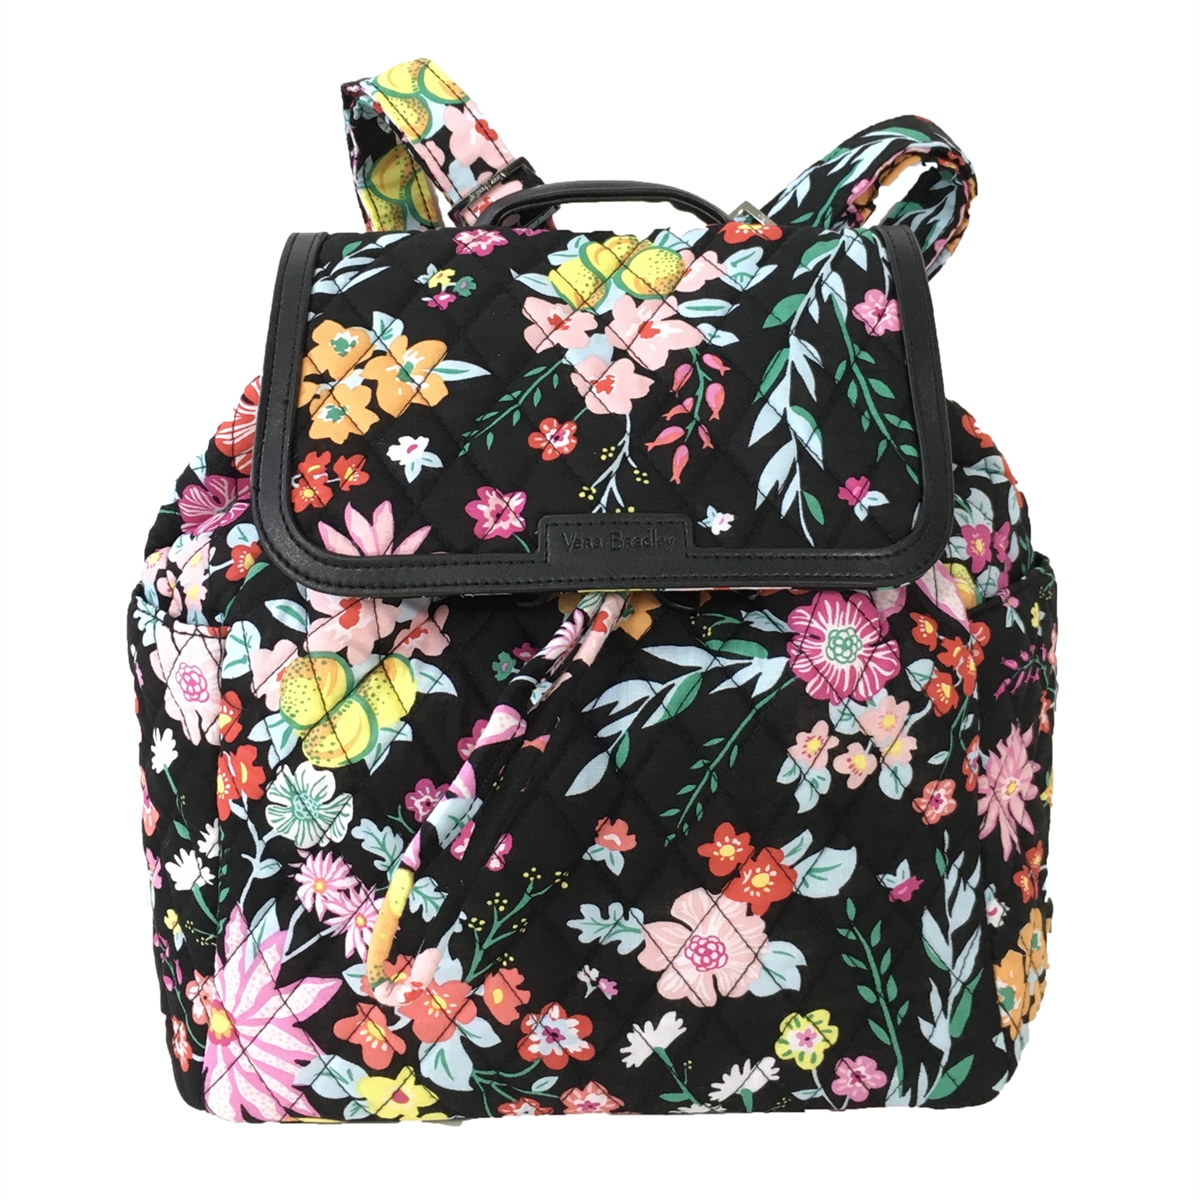 Vera Bradley Quilted Floral Print Fashion Backpack Daypack, Tangerine Twist